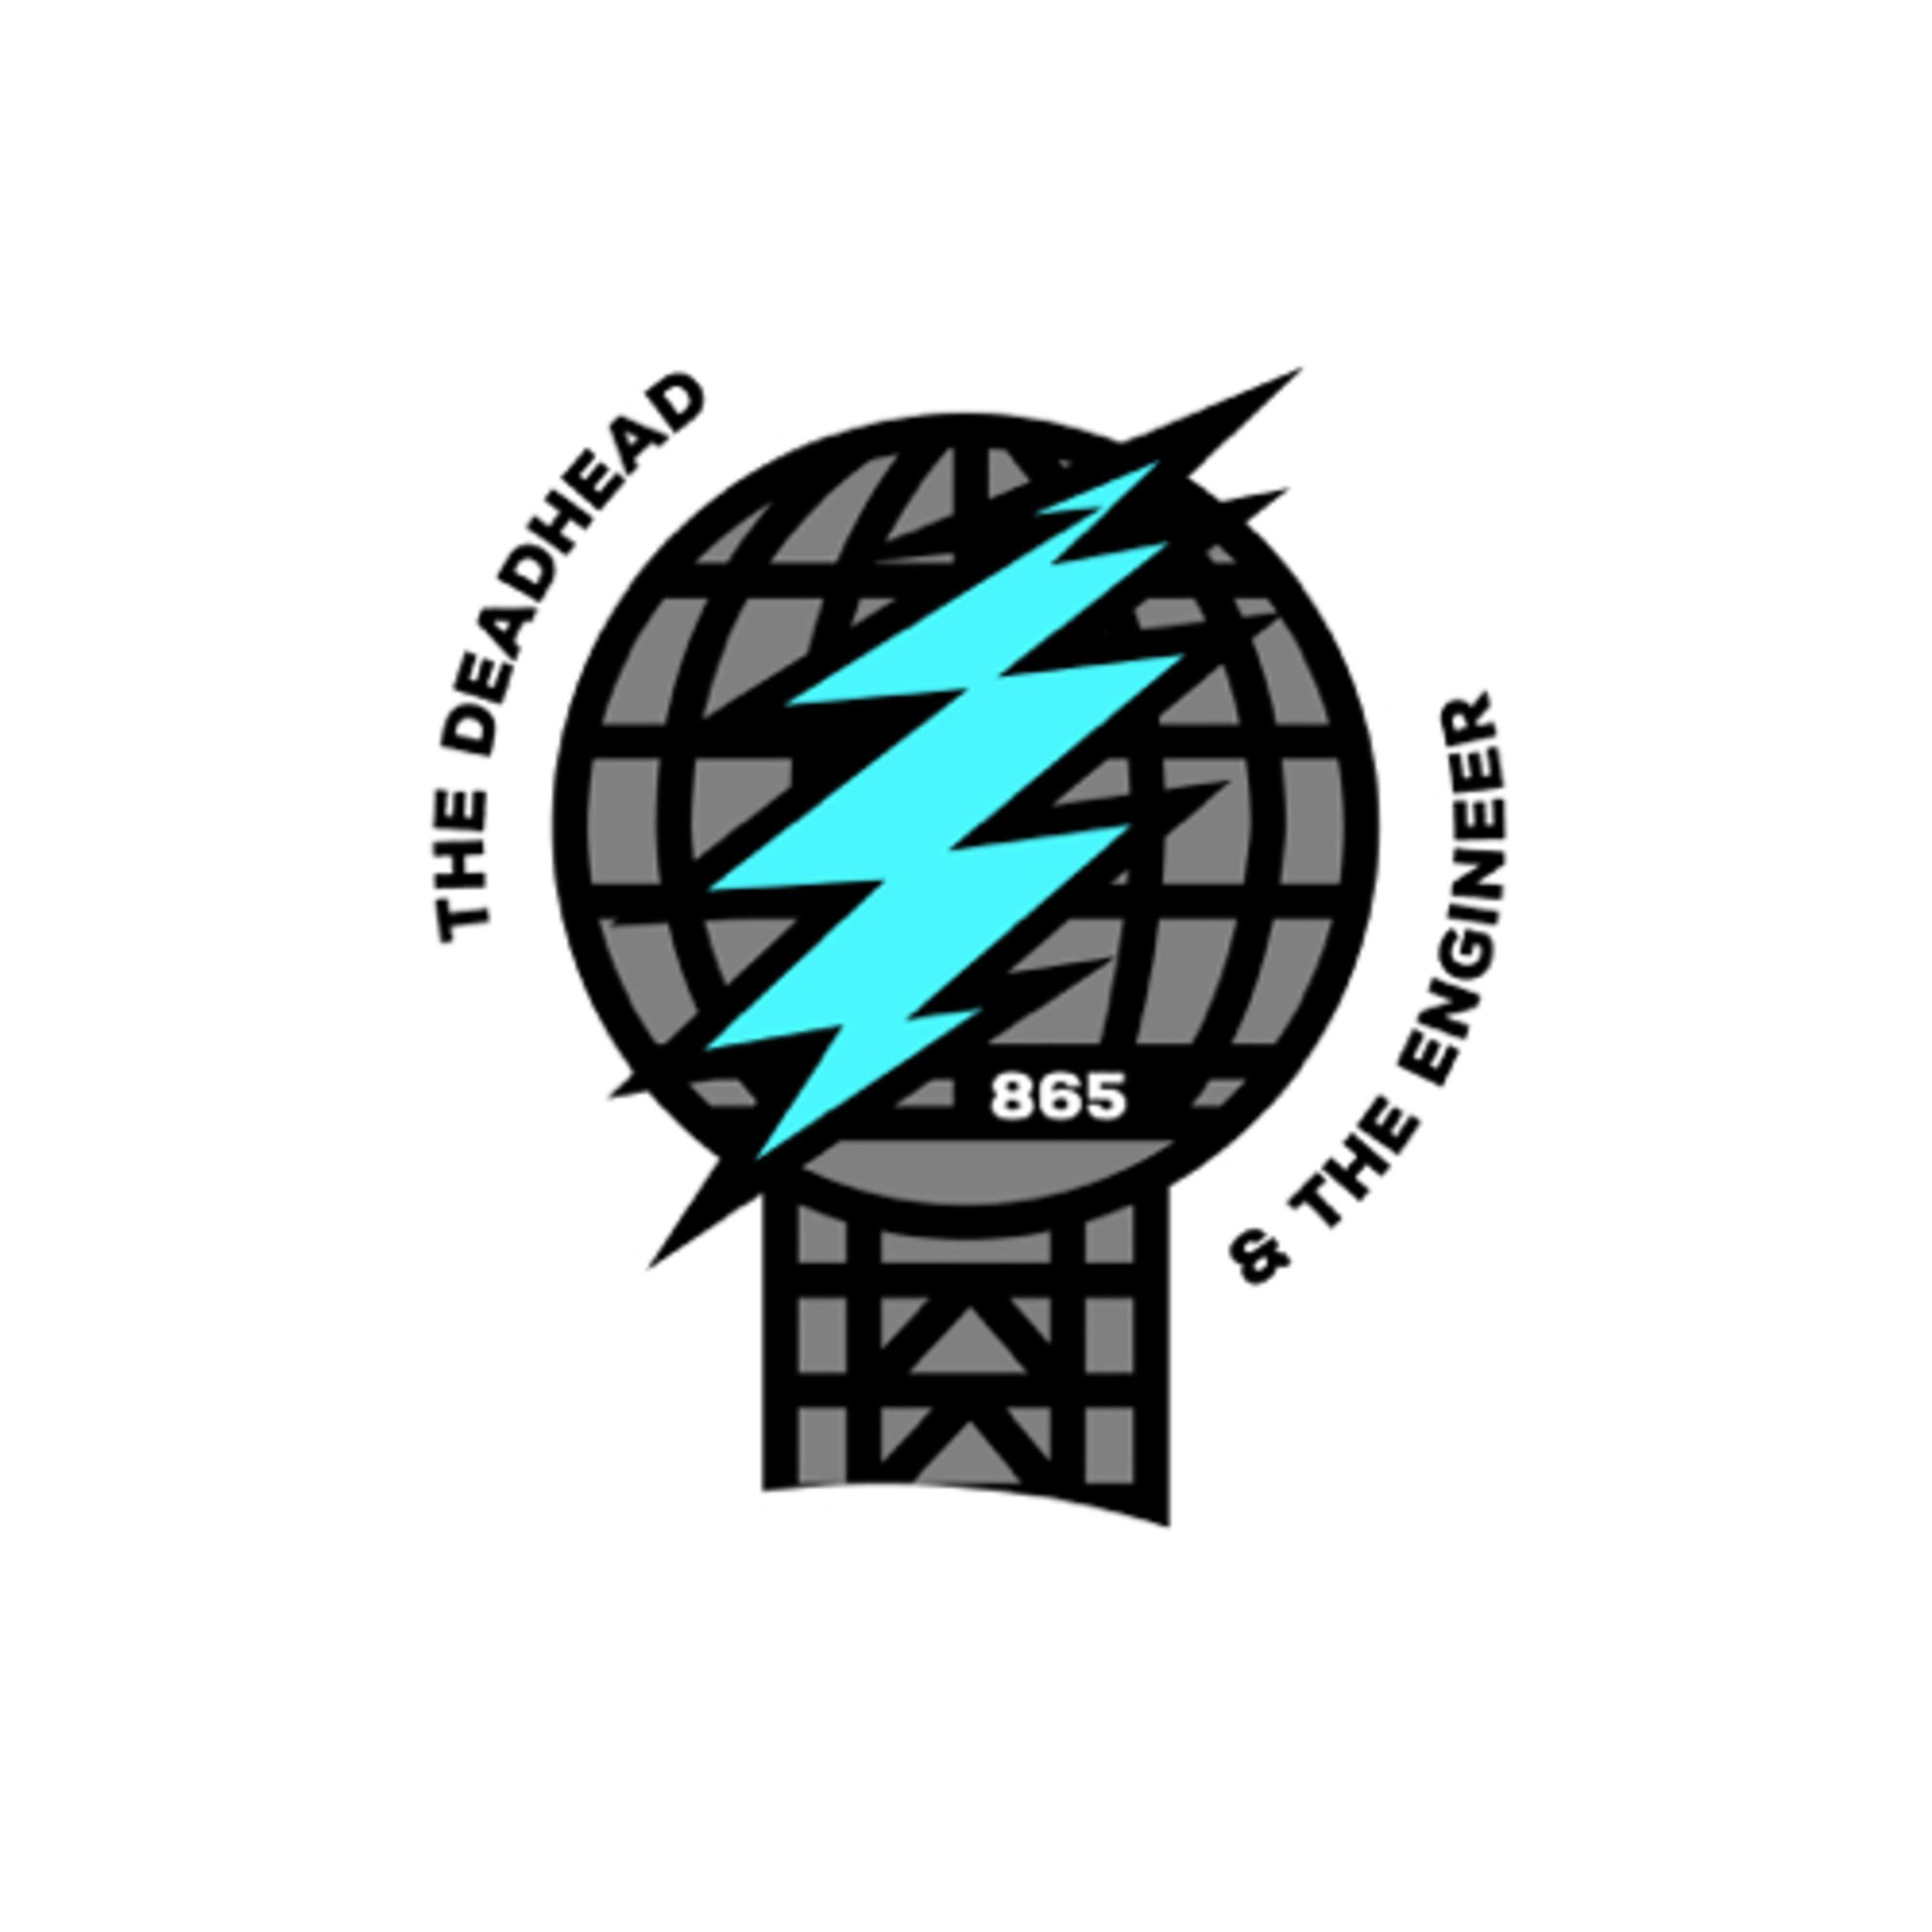 Deadhead Logo - Listen Free to The Deadhead & The Engineer on iHeartRadio Podcasts ...